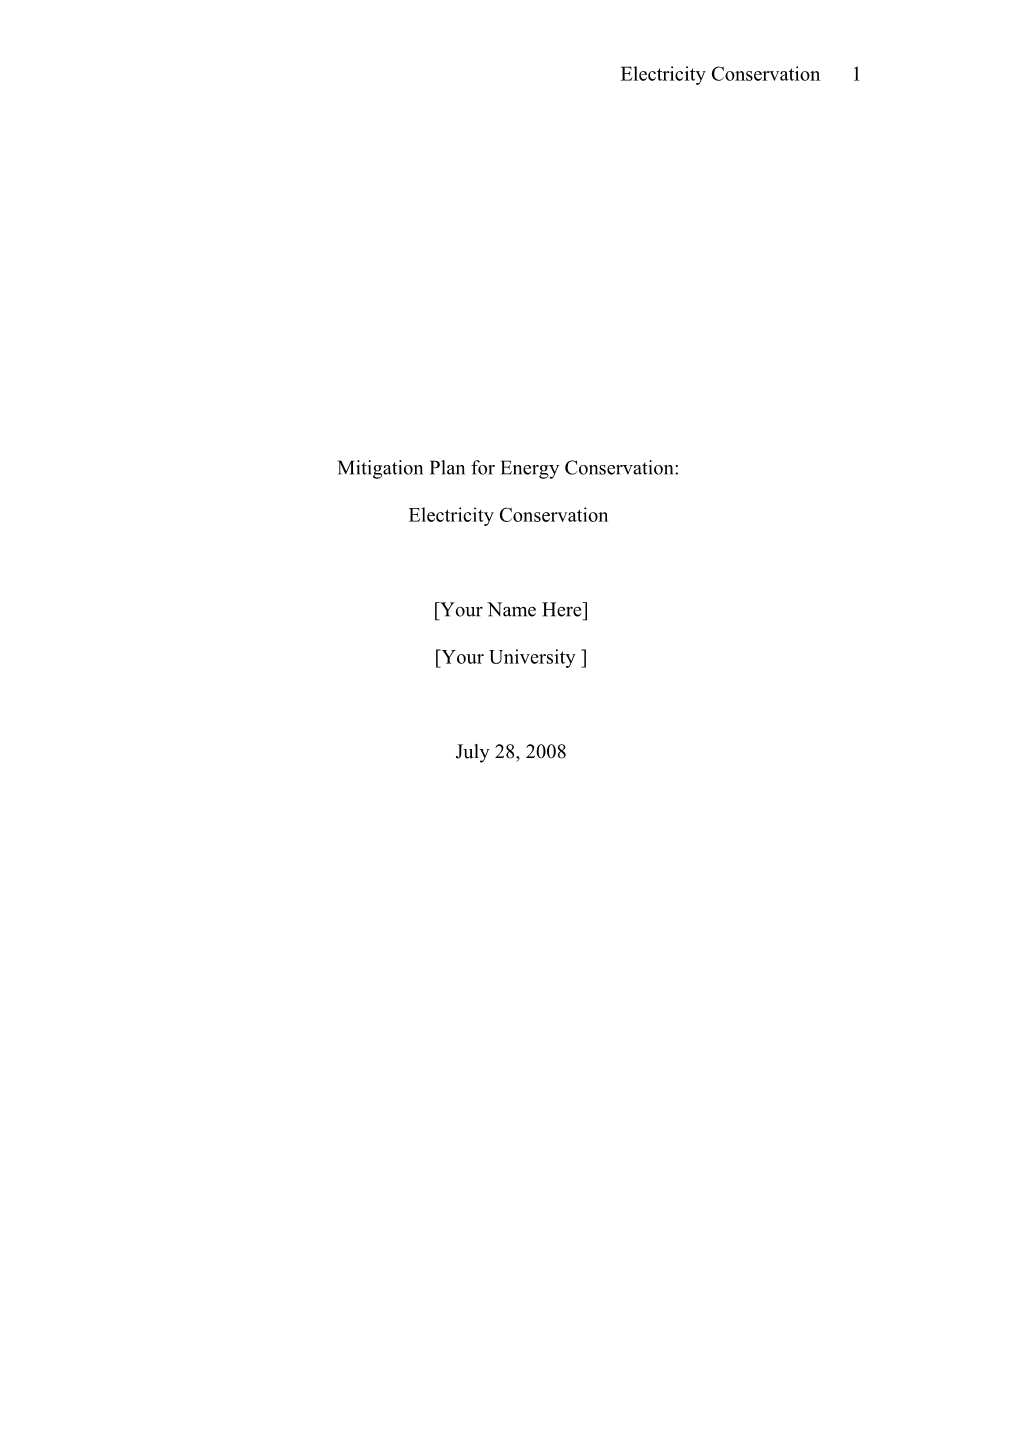 Mitigation Plan for Energy Conservation